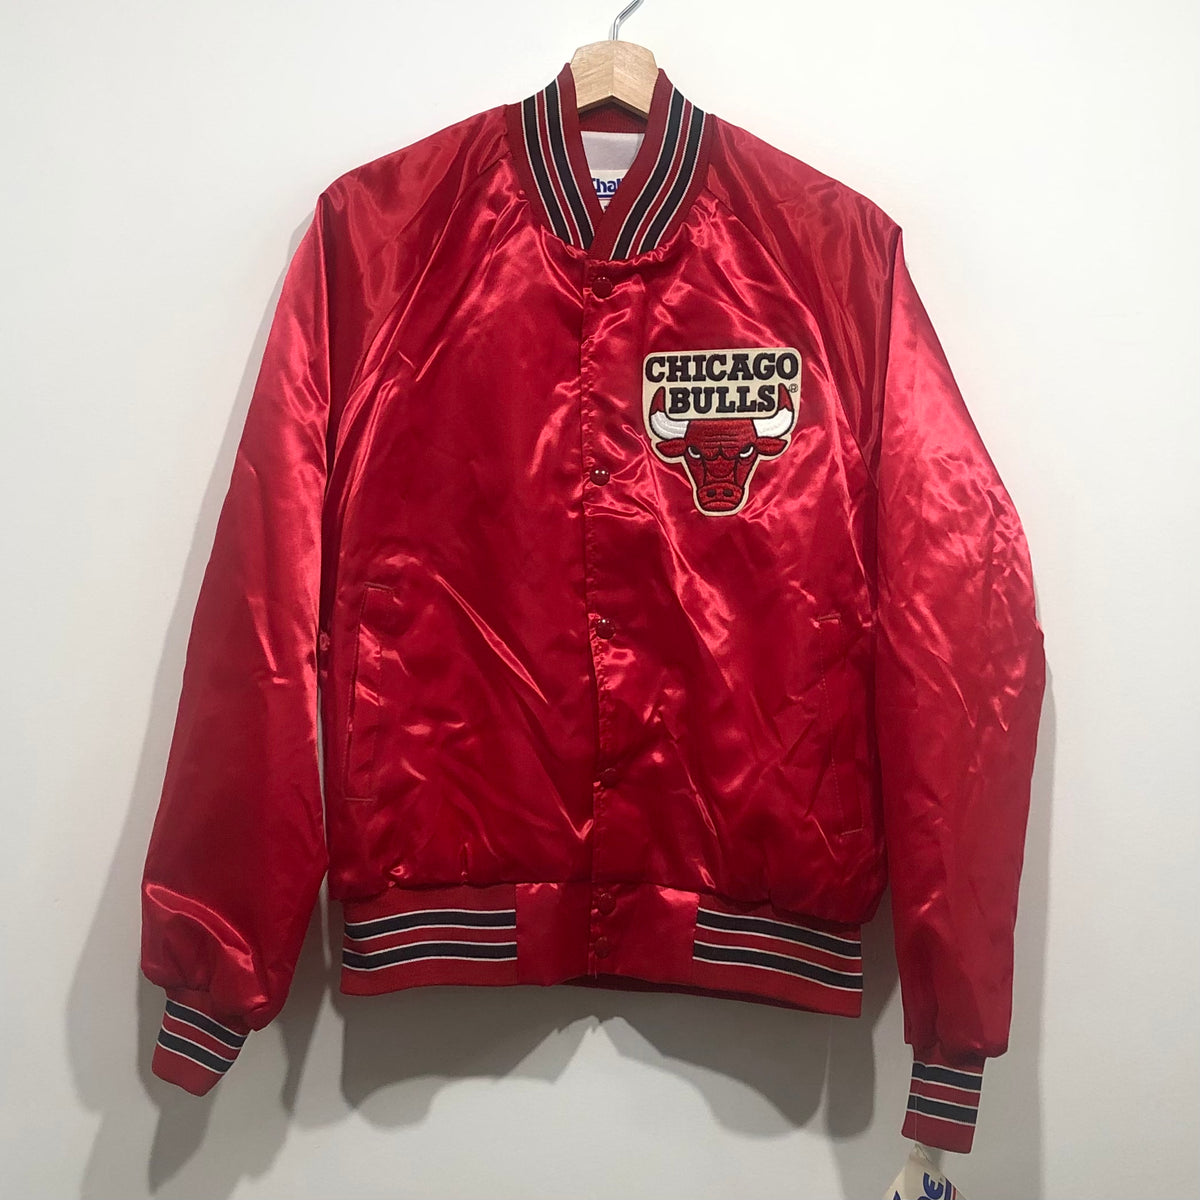 chicago bulls vintage jacket price